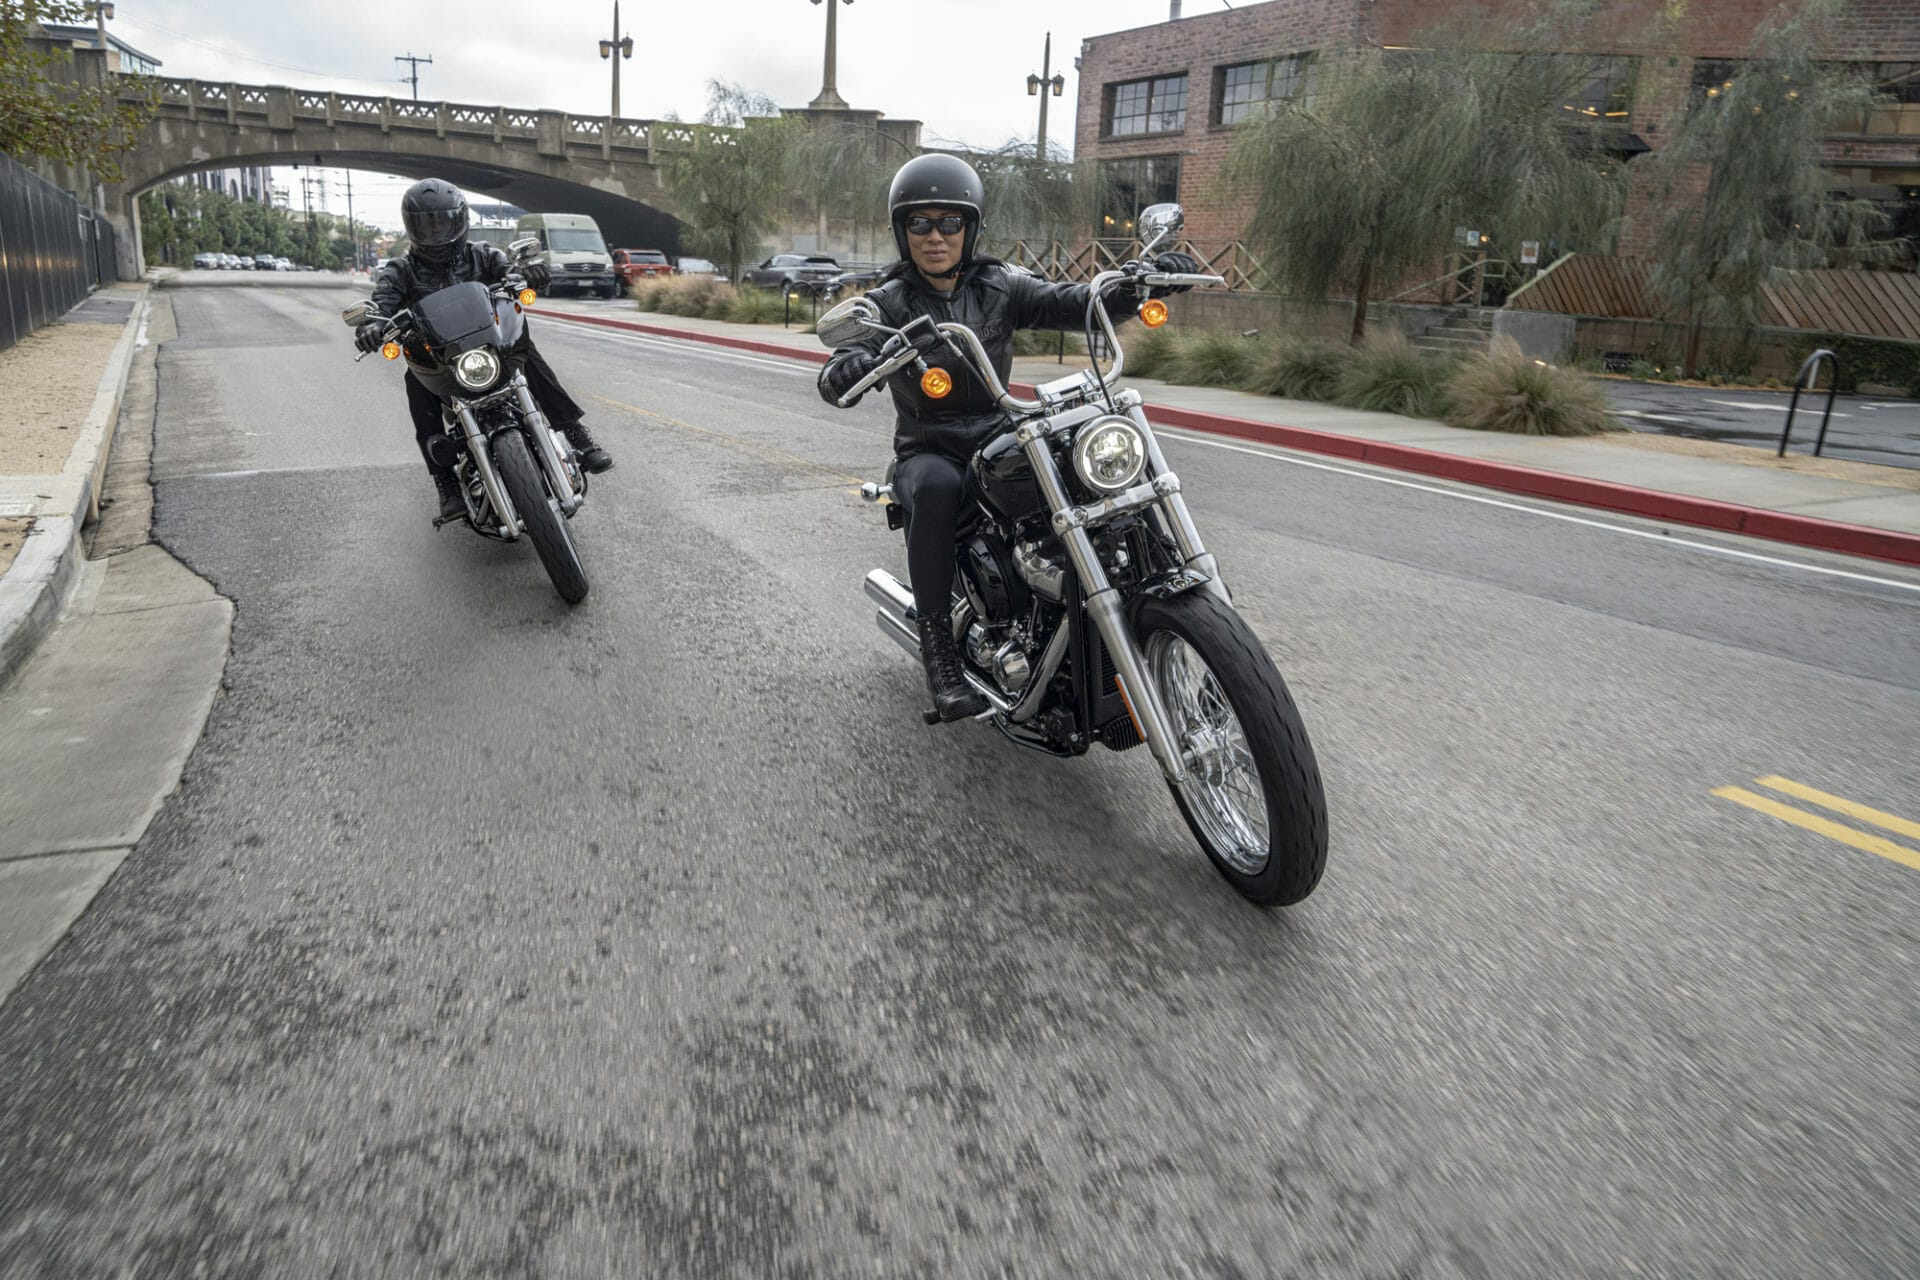 https://ezfo86czbpk.exactdn.com/wp-content/uploads/2020/02/Harley-Davidson-Softail-Standard-MOTORCYCLE-NEWS-APP-MOTORRAD-NACHRICHTEN-APP-MotorcyclesNews-7.jpg